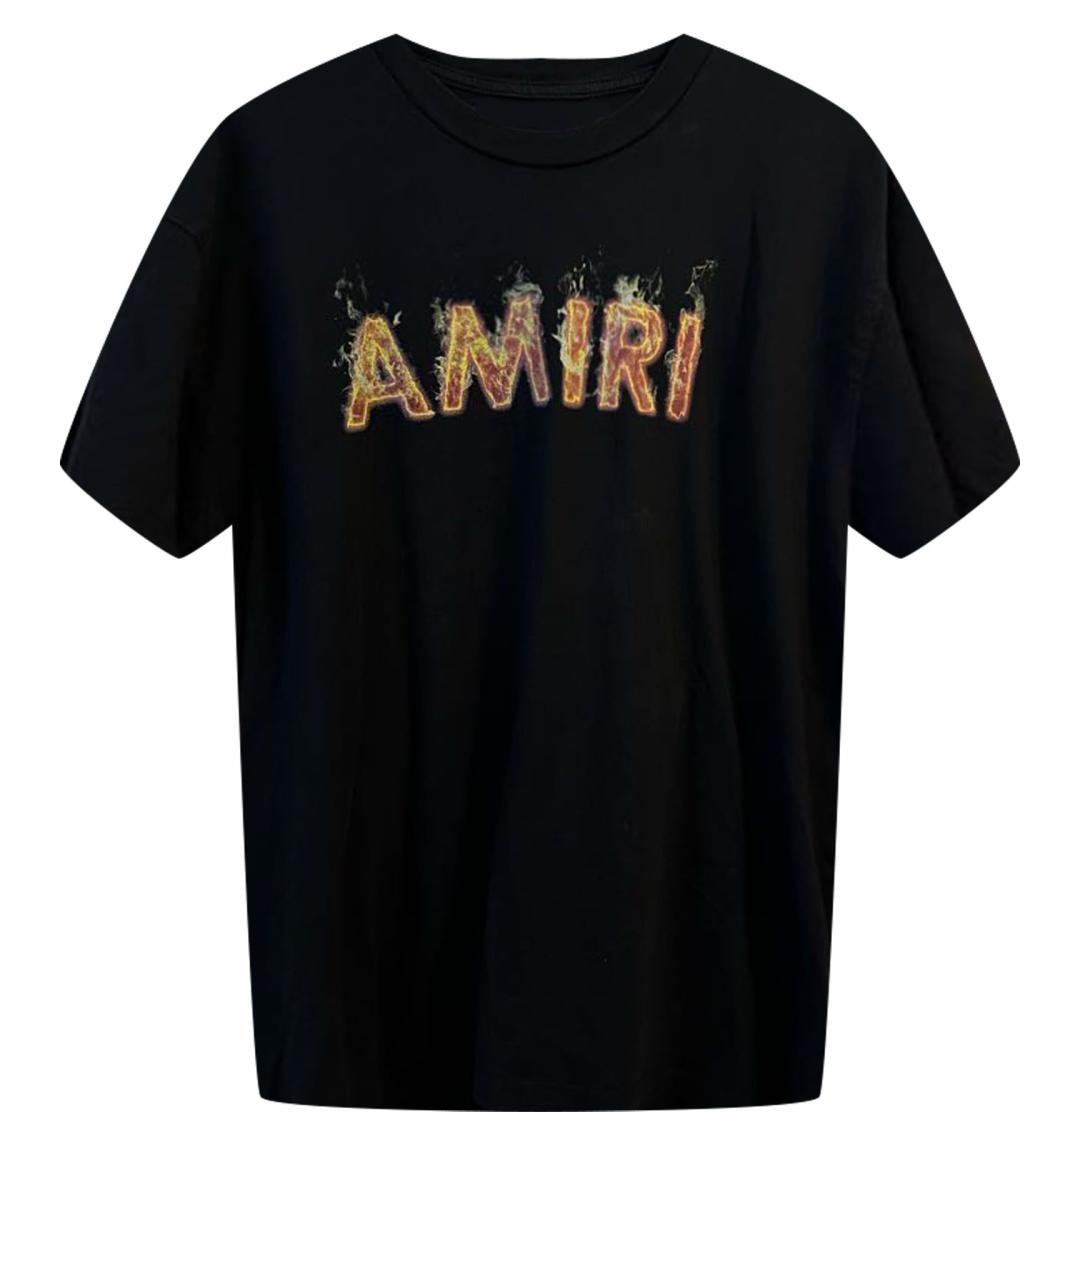 AMIRI Черная хлопковая футболка, фото 1